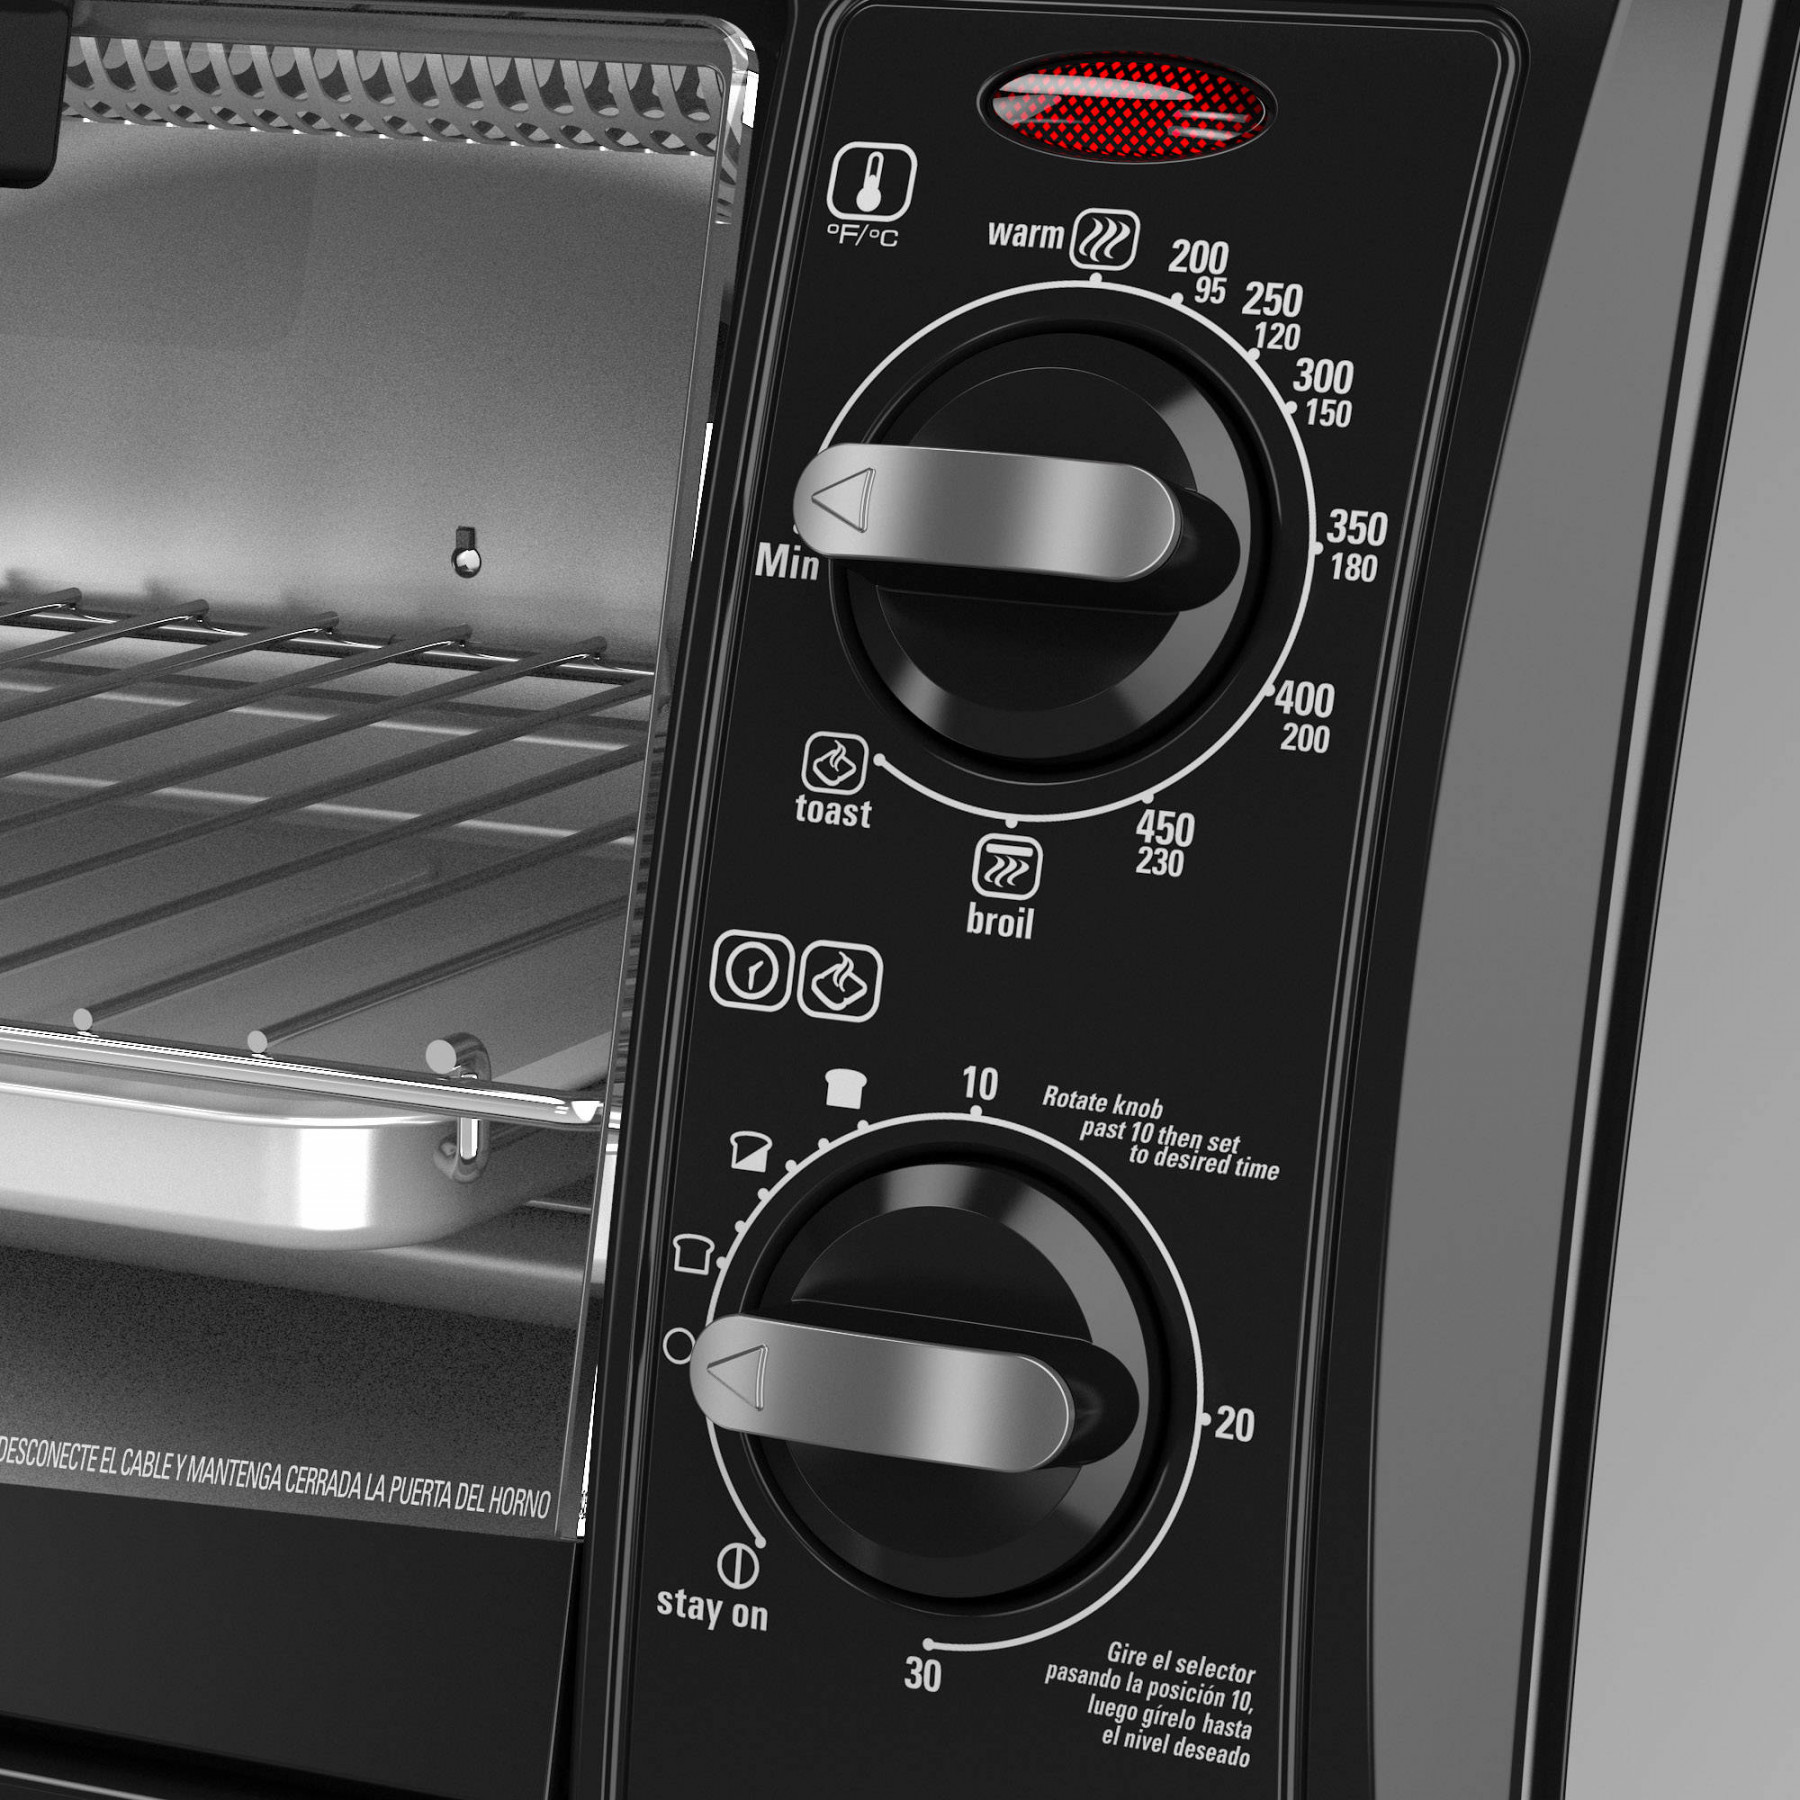 Black and Decker 4-Slice Toaster Oven Black